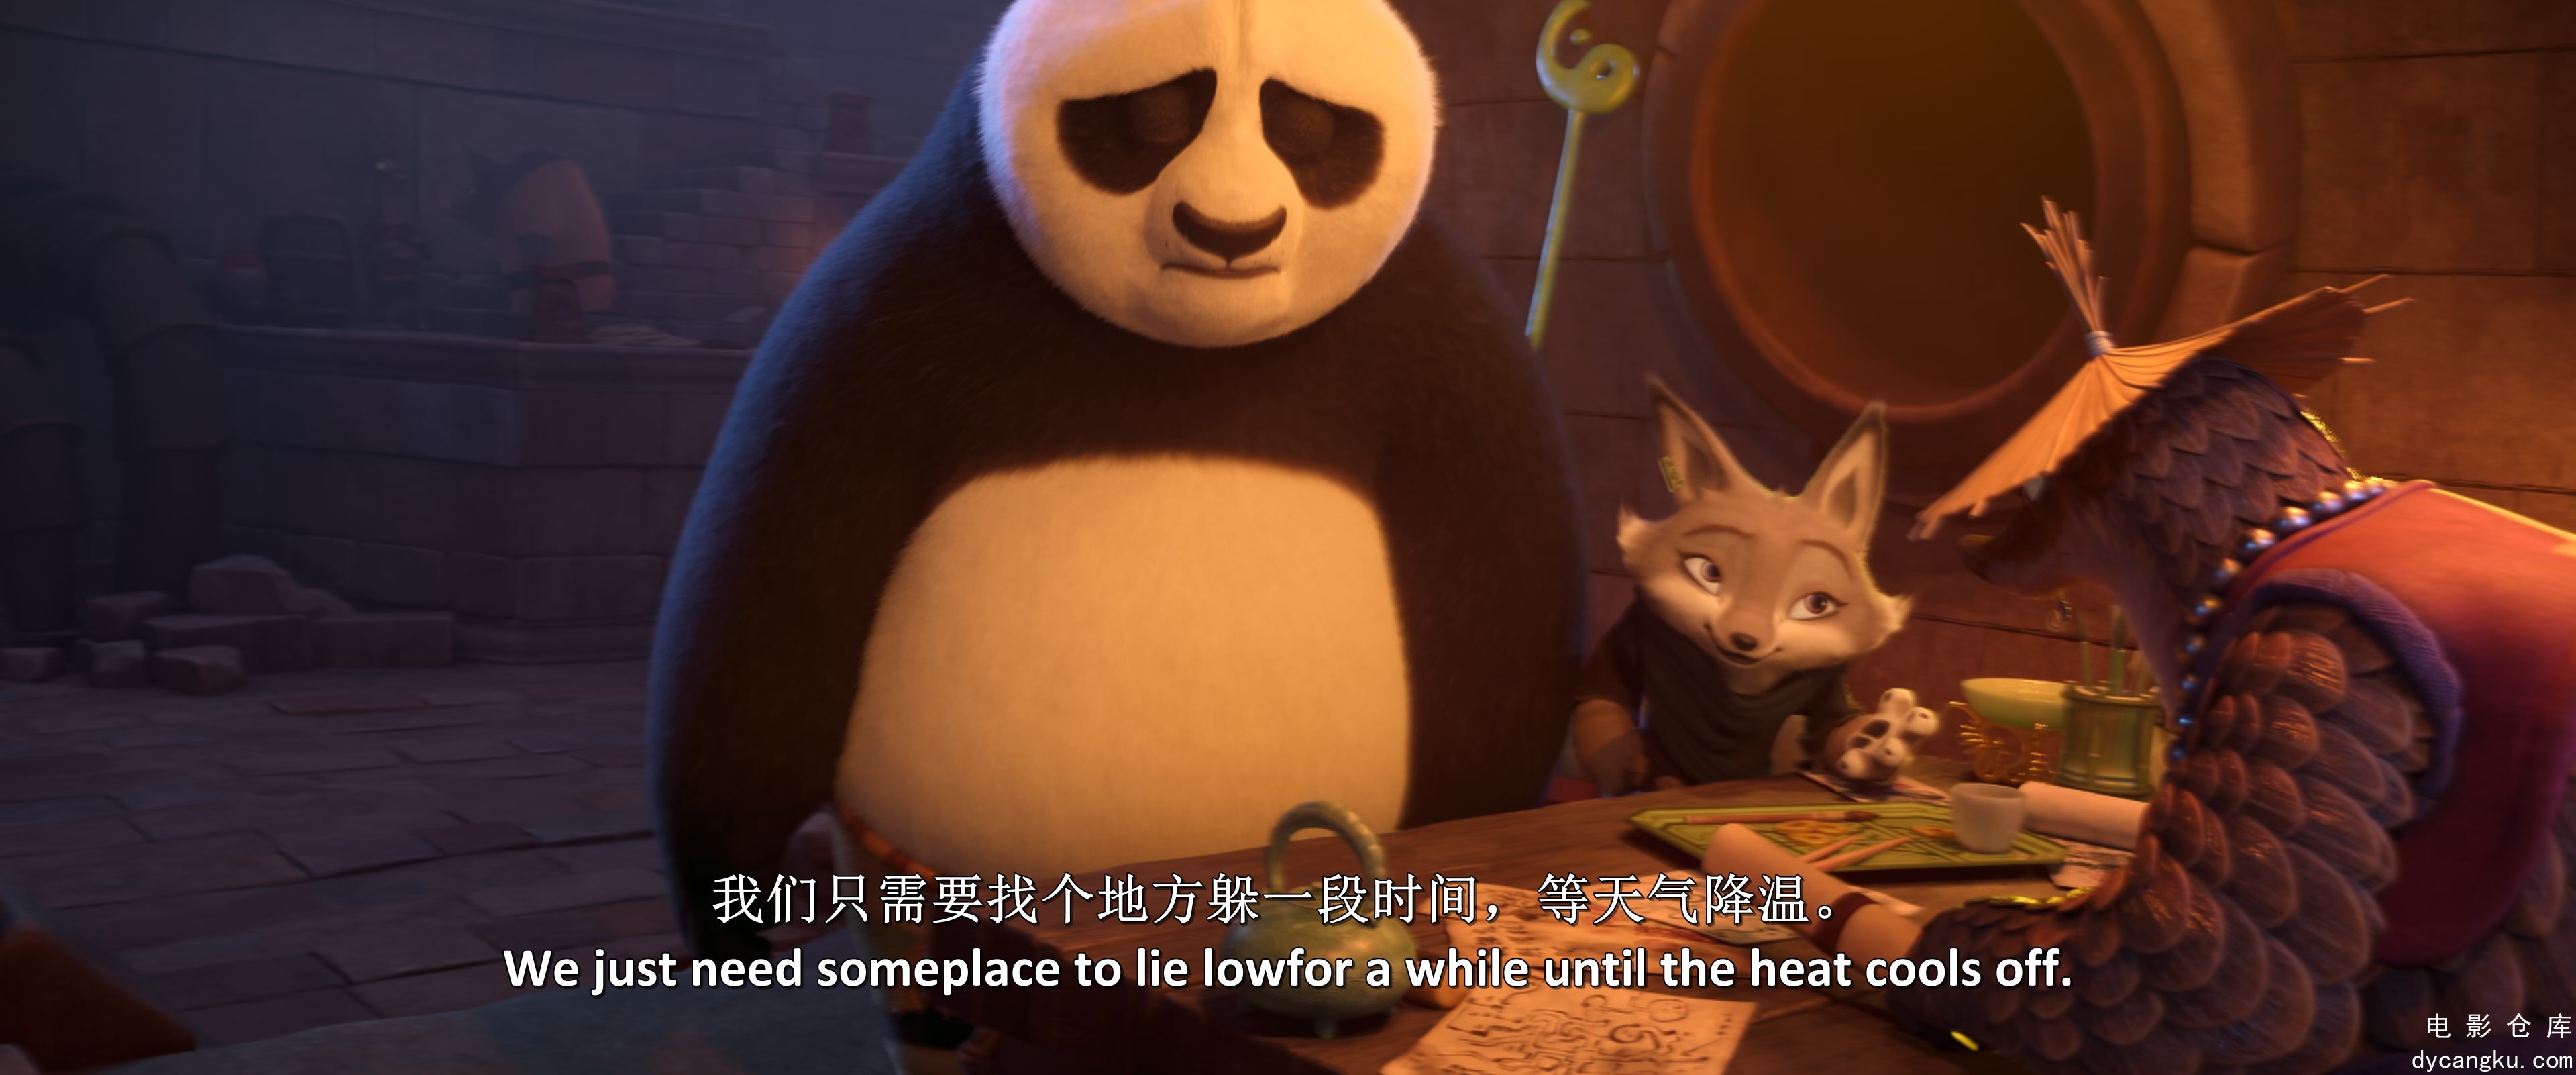 [电影仓库dycangku.com]Kung.Fu.Panda.4.2024.2160p.WEB.h265.mkv_snapshot_00.43.50.271.jpg